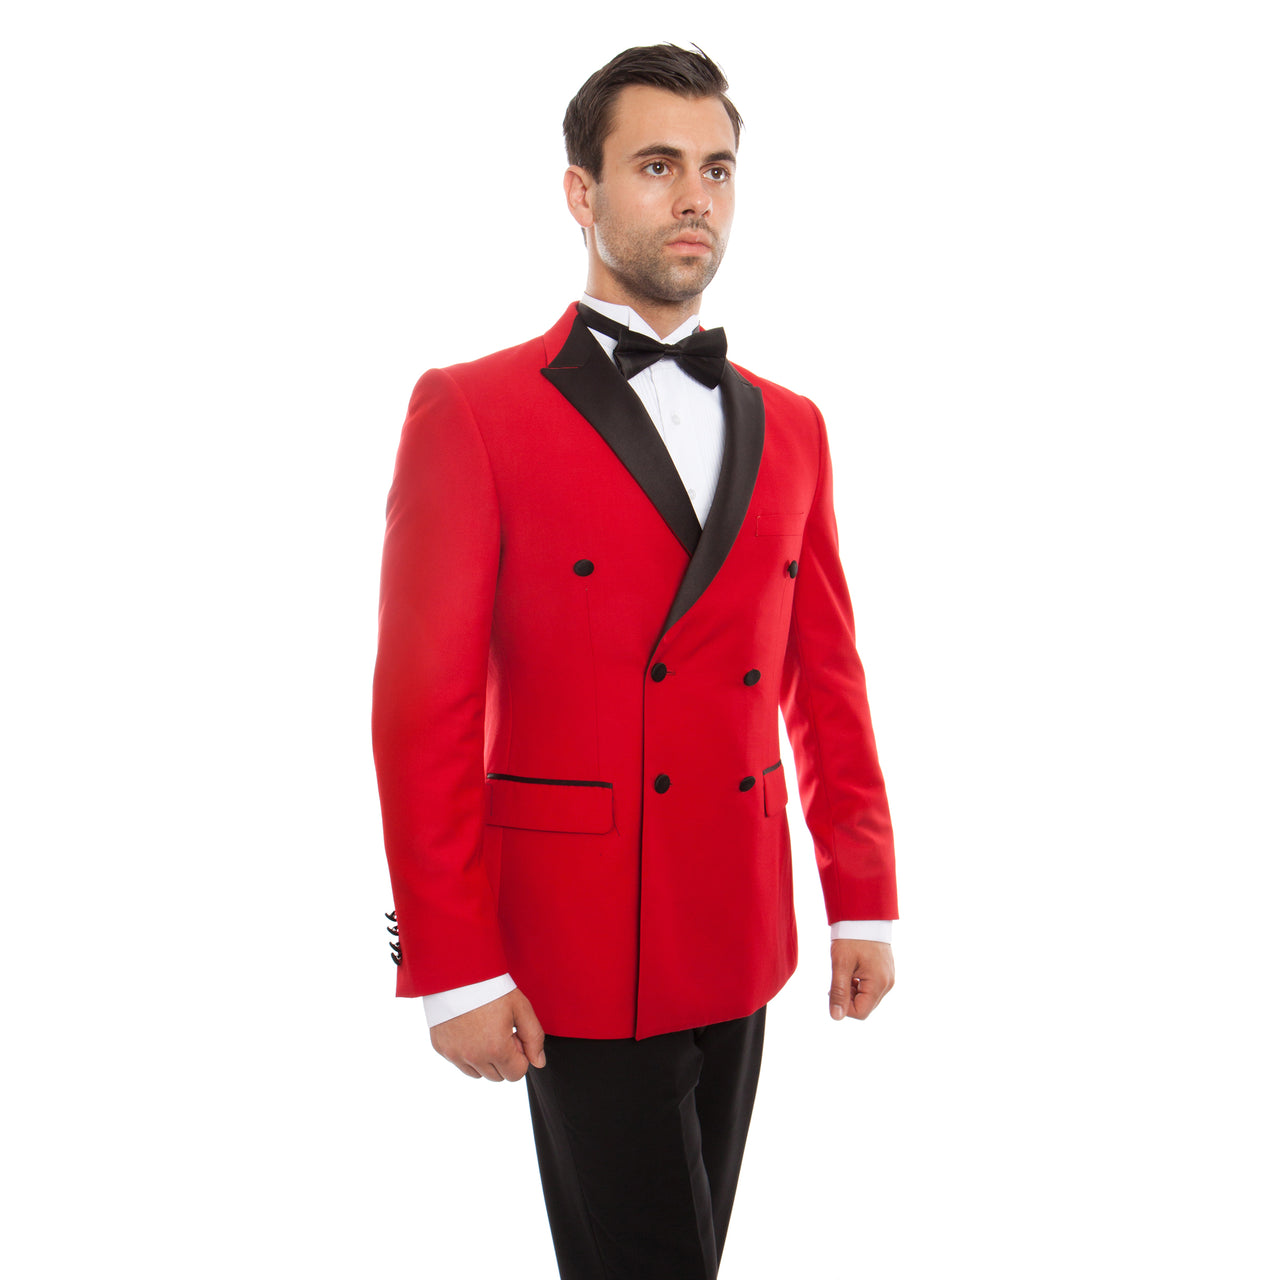 Red / Black Satin Bryan Michaels Shawl Collar Tuxedo For Men MT253S-03 - Hattitude